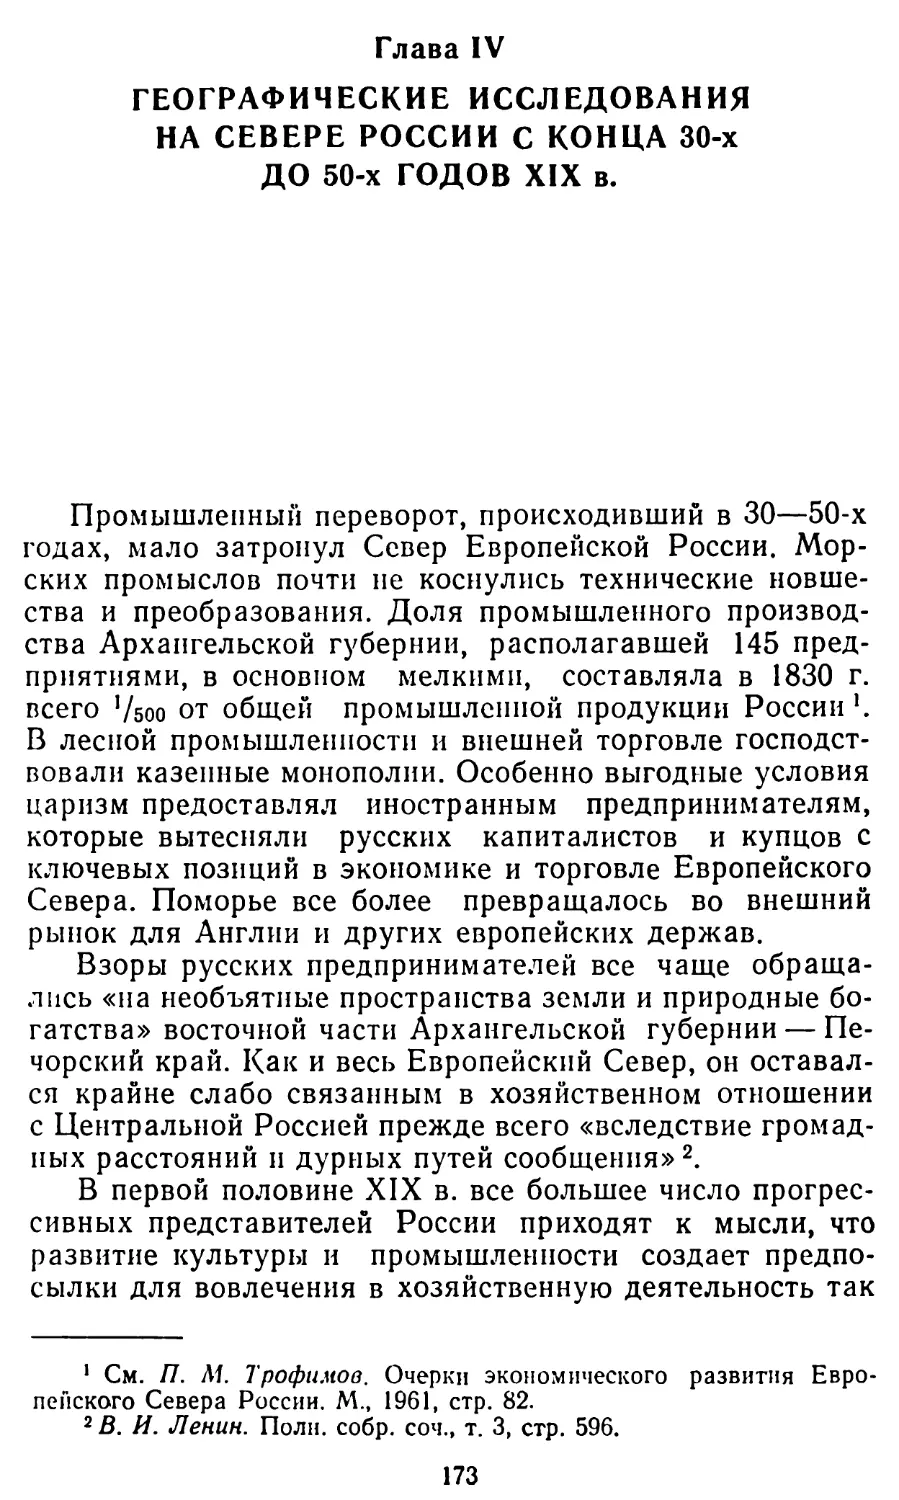 Глава IV. Географические исследования на севере России с конца 30-х до 50-х годов XIX в